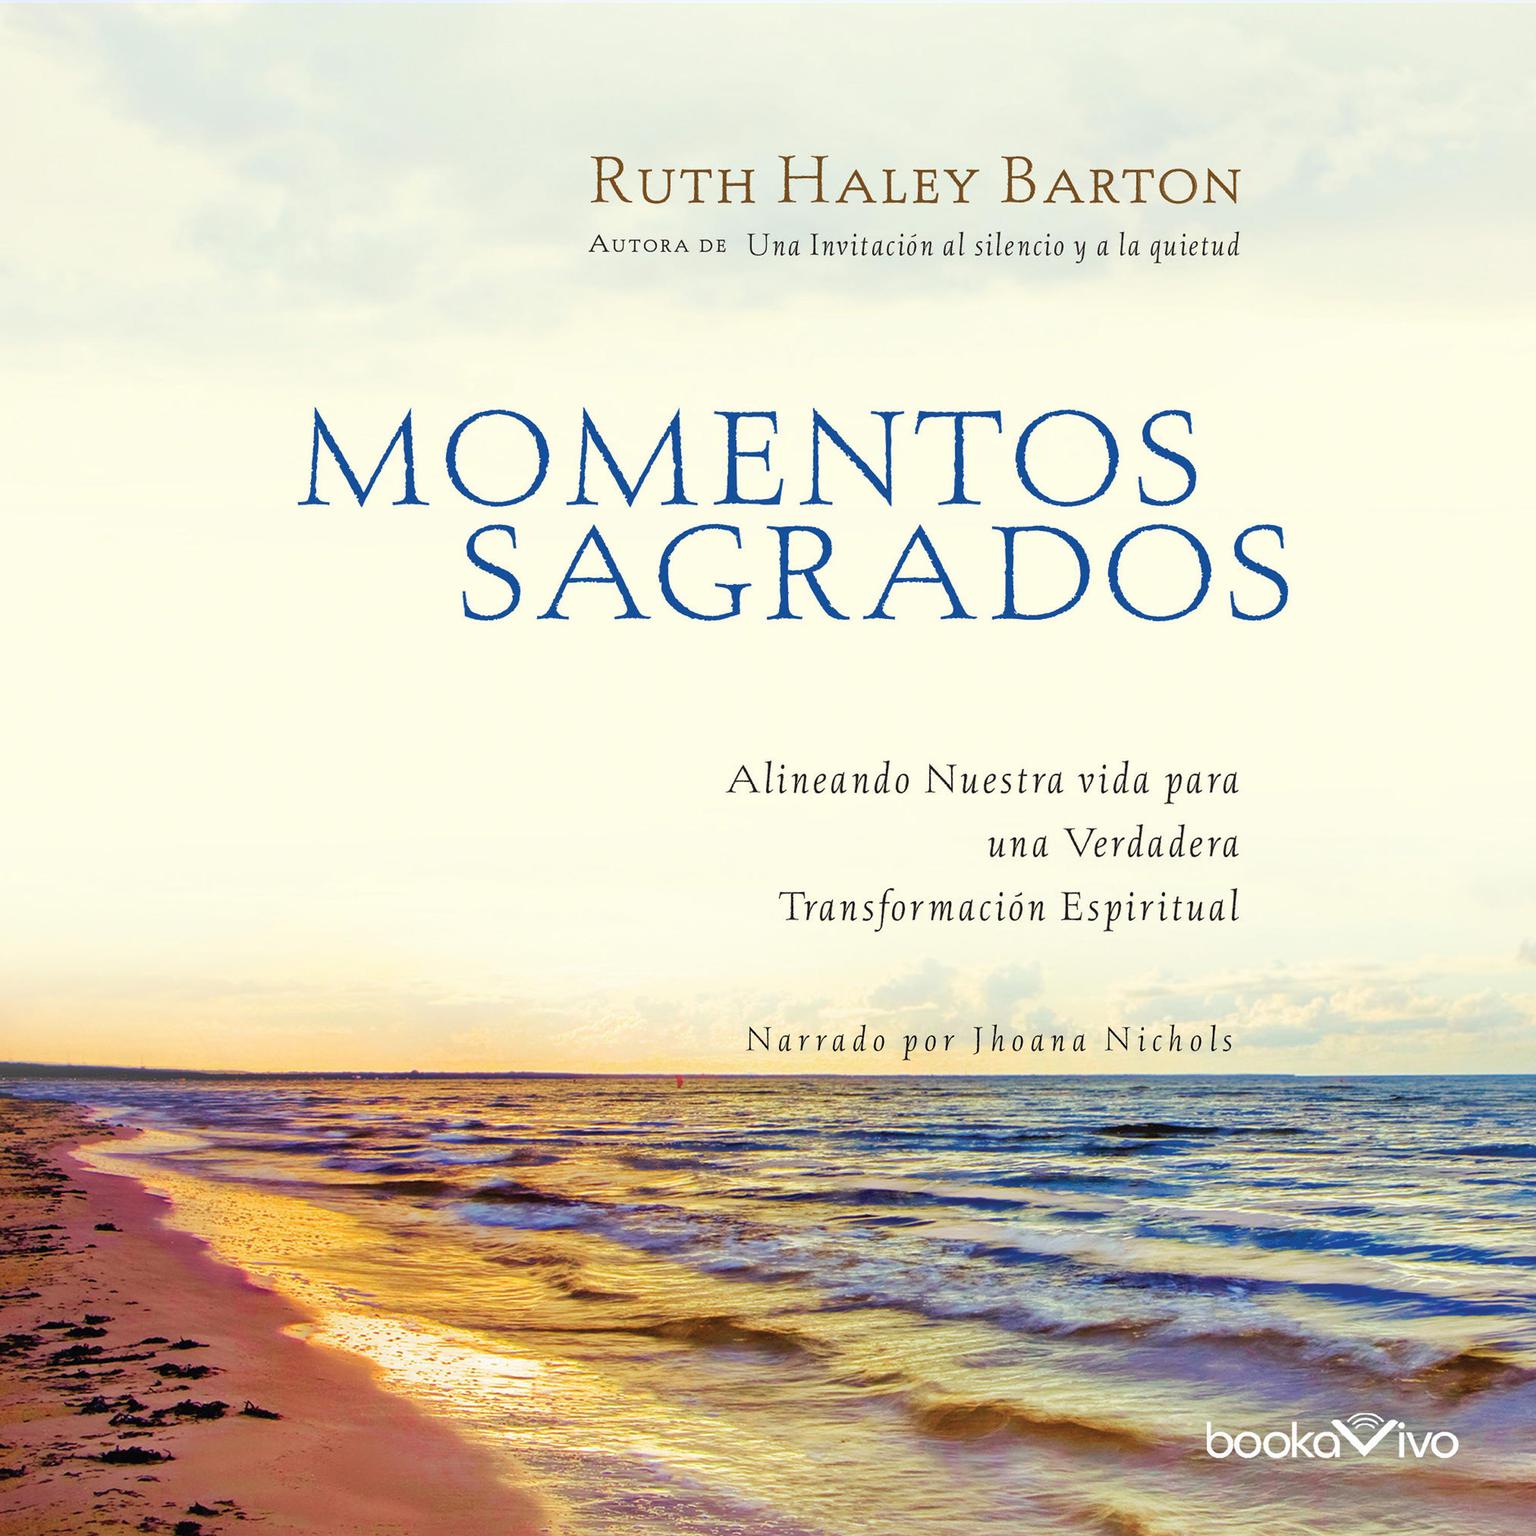 Momentos Sagrados: Alineando Nuestra vida para una Verdadera Transformacion Espiritual (Arranging Our Lives for Spiritual Transformation) Audiobook, by Ruth Haley Barton